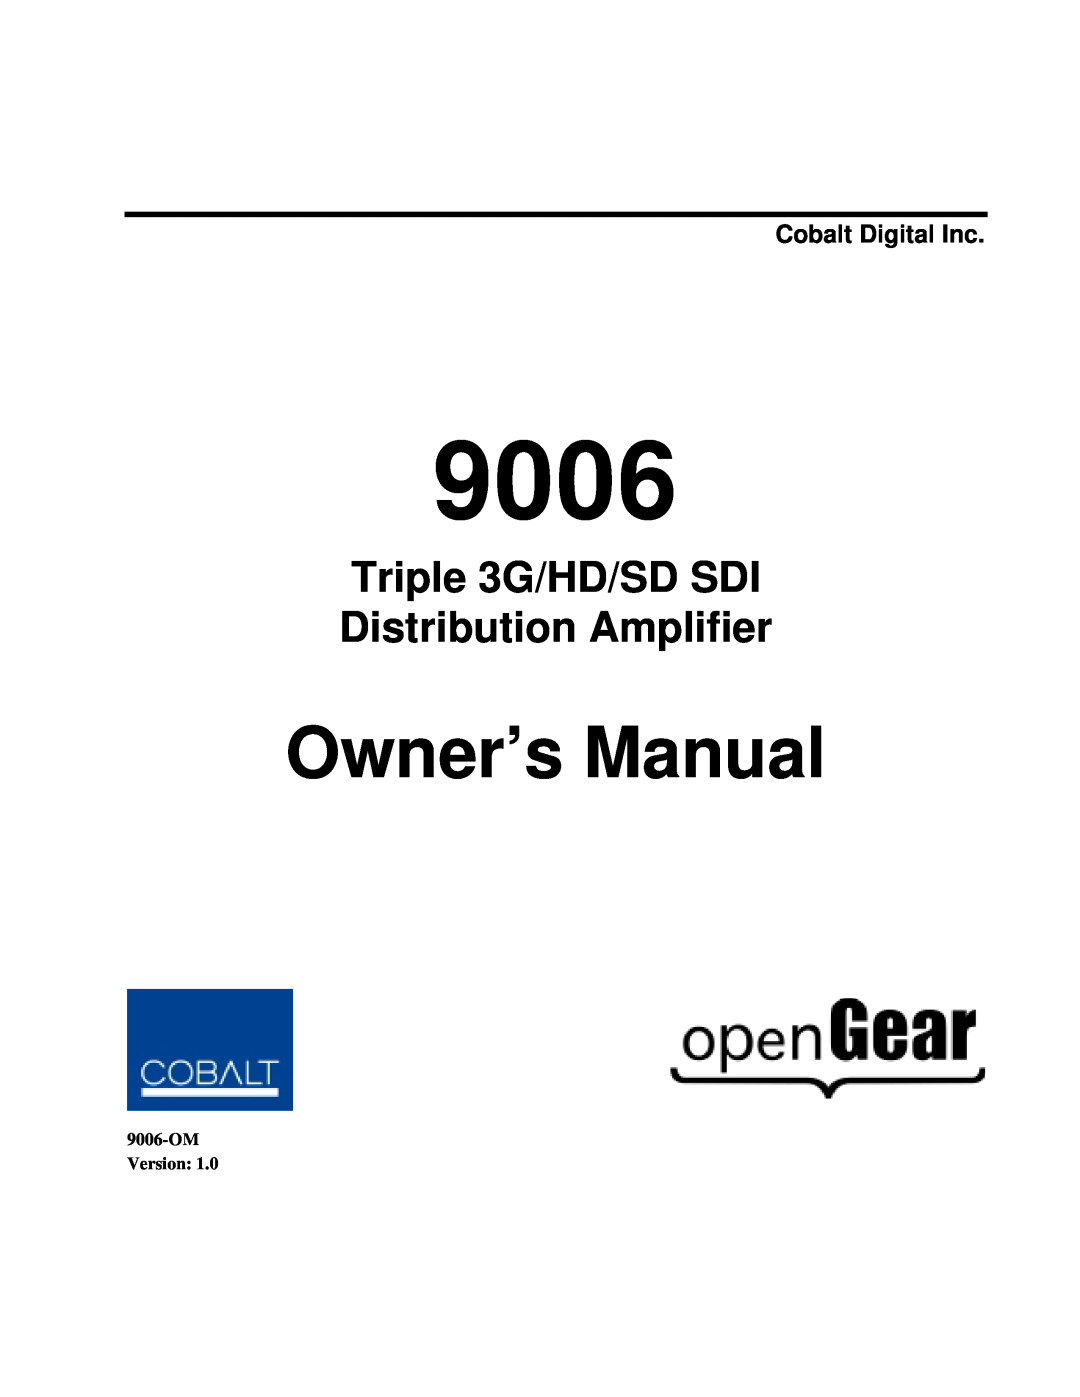 Cobalt Networks 9006 owner manual Cobalt Digital Inc, Triple 3G/HD/SD SDI Distribution Amplifier 